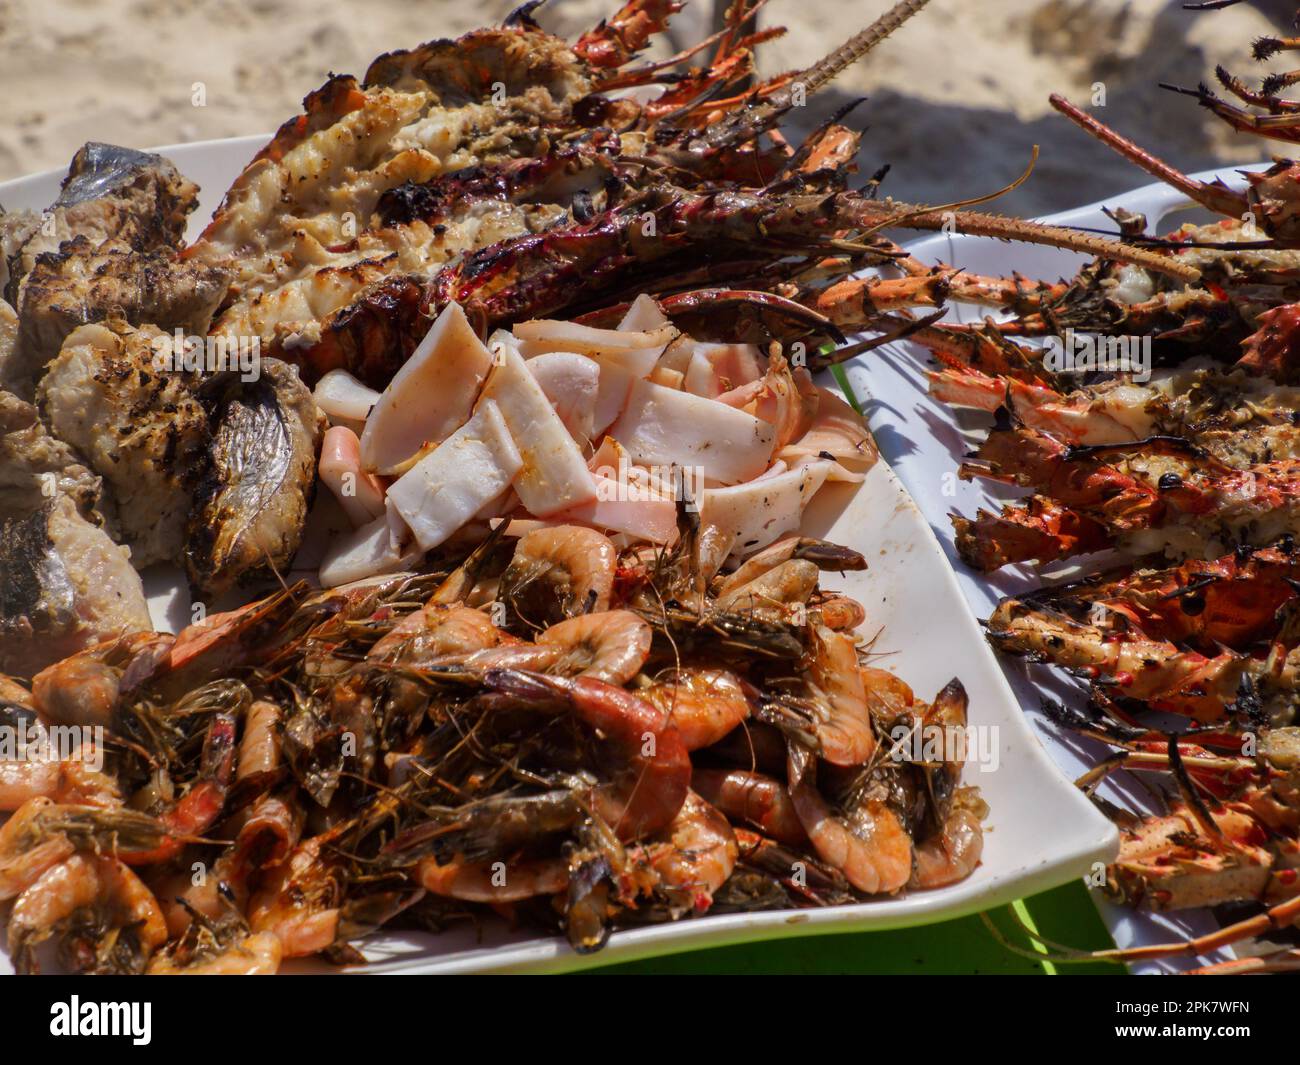 Grilled seafood served during a Blue Safari to sandbank in Menai Bay with beautiful sandy beach and lazure water, Zanzibar archipelago, Africa, Zanzib Stock Photo